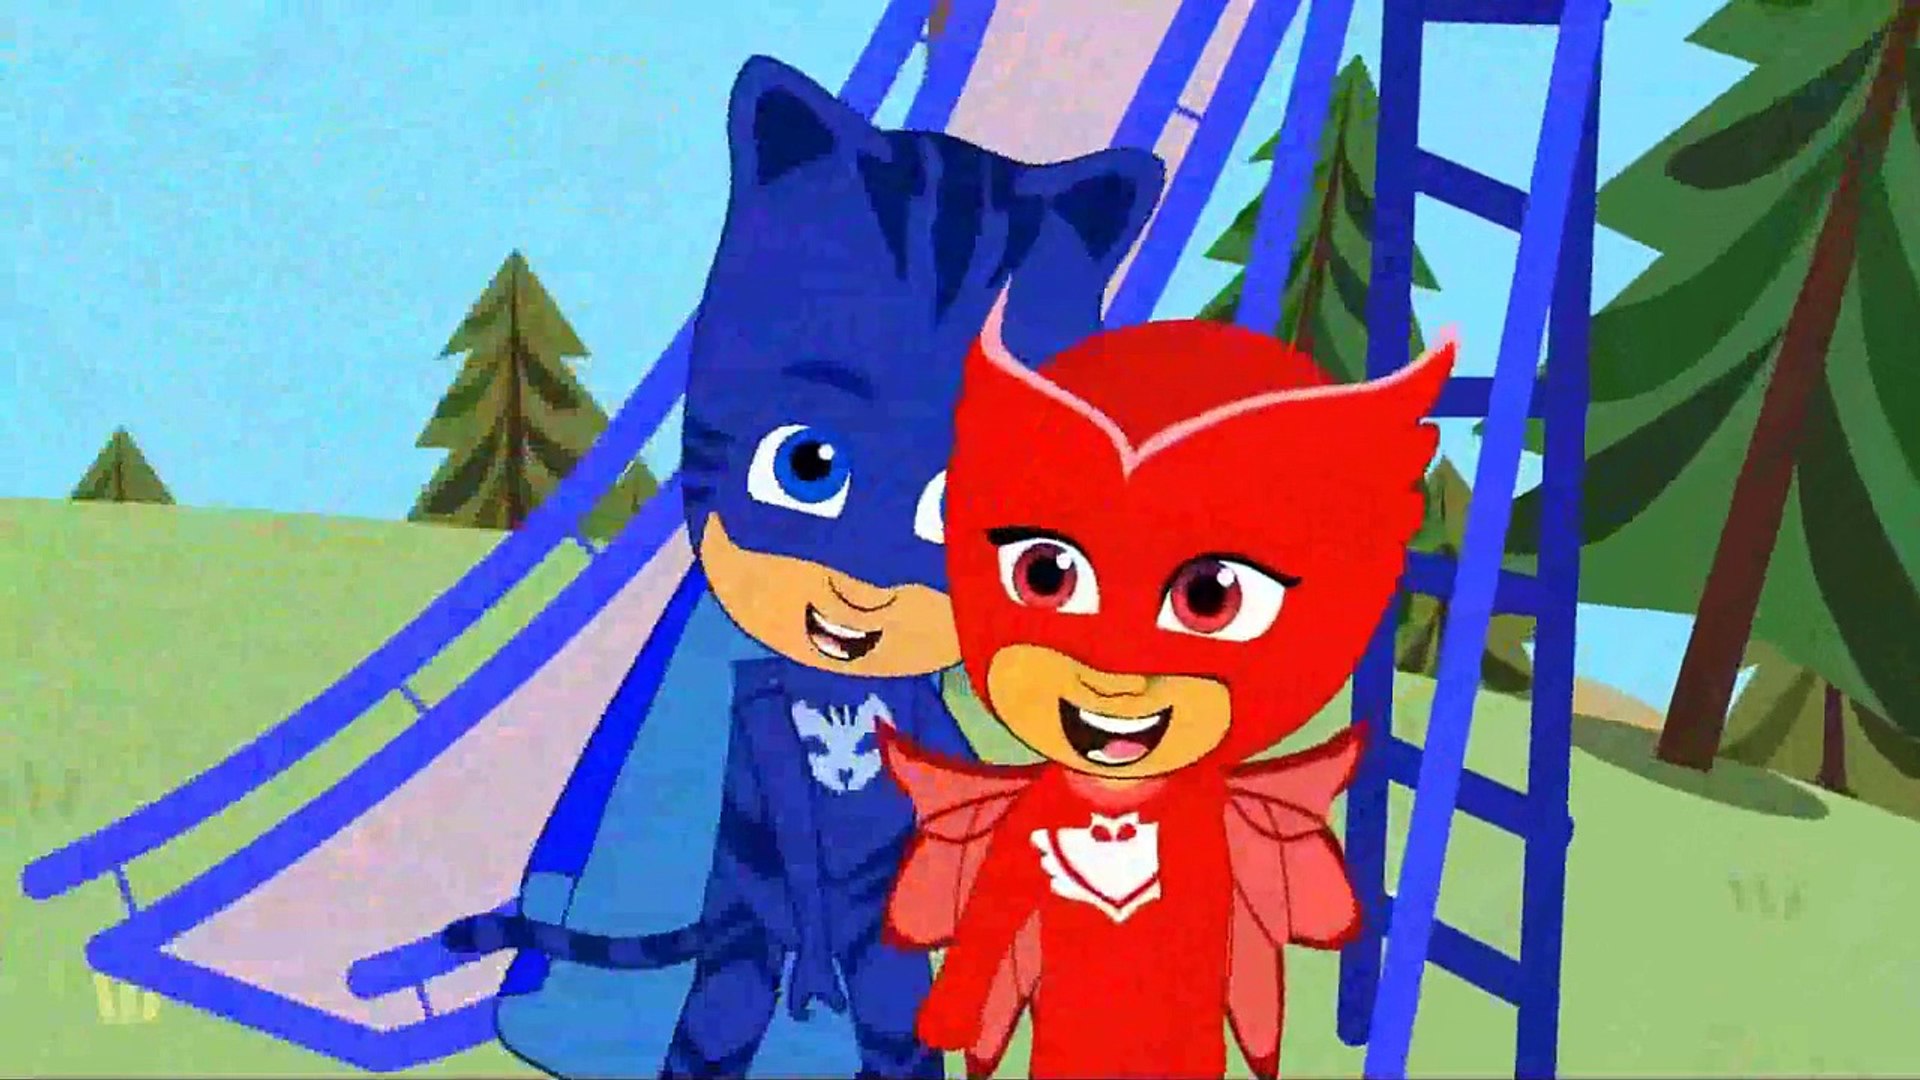 Pj Masks Disney Junior Full Episodes Compilation Owlette Kiss Ninja Gekko And Catboy Nursery Rhymes Funny Story For Kids Video Dailymotion